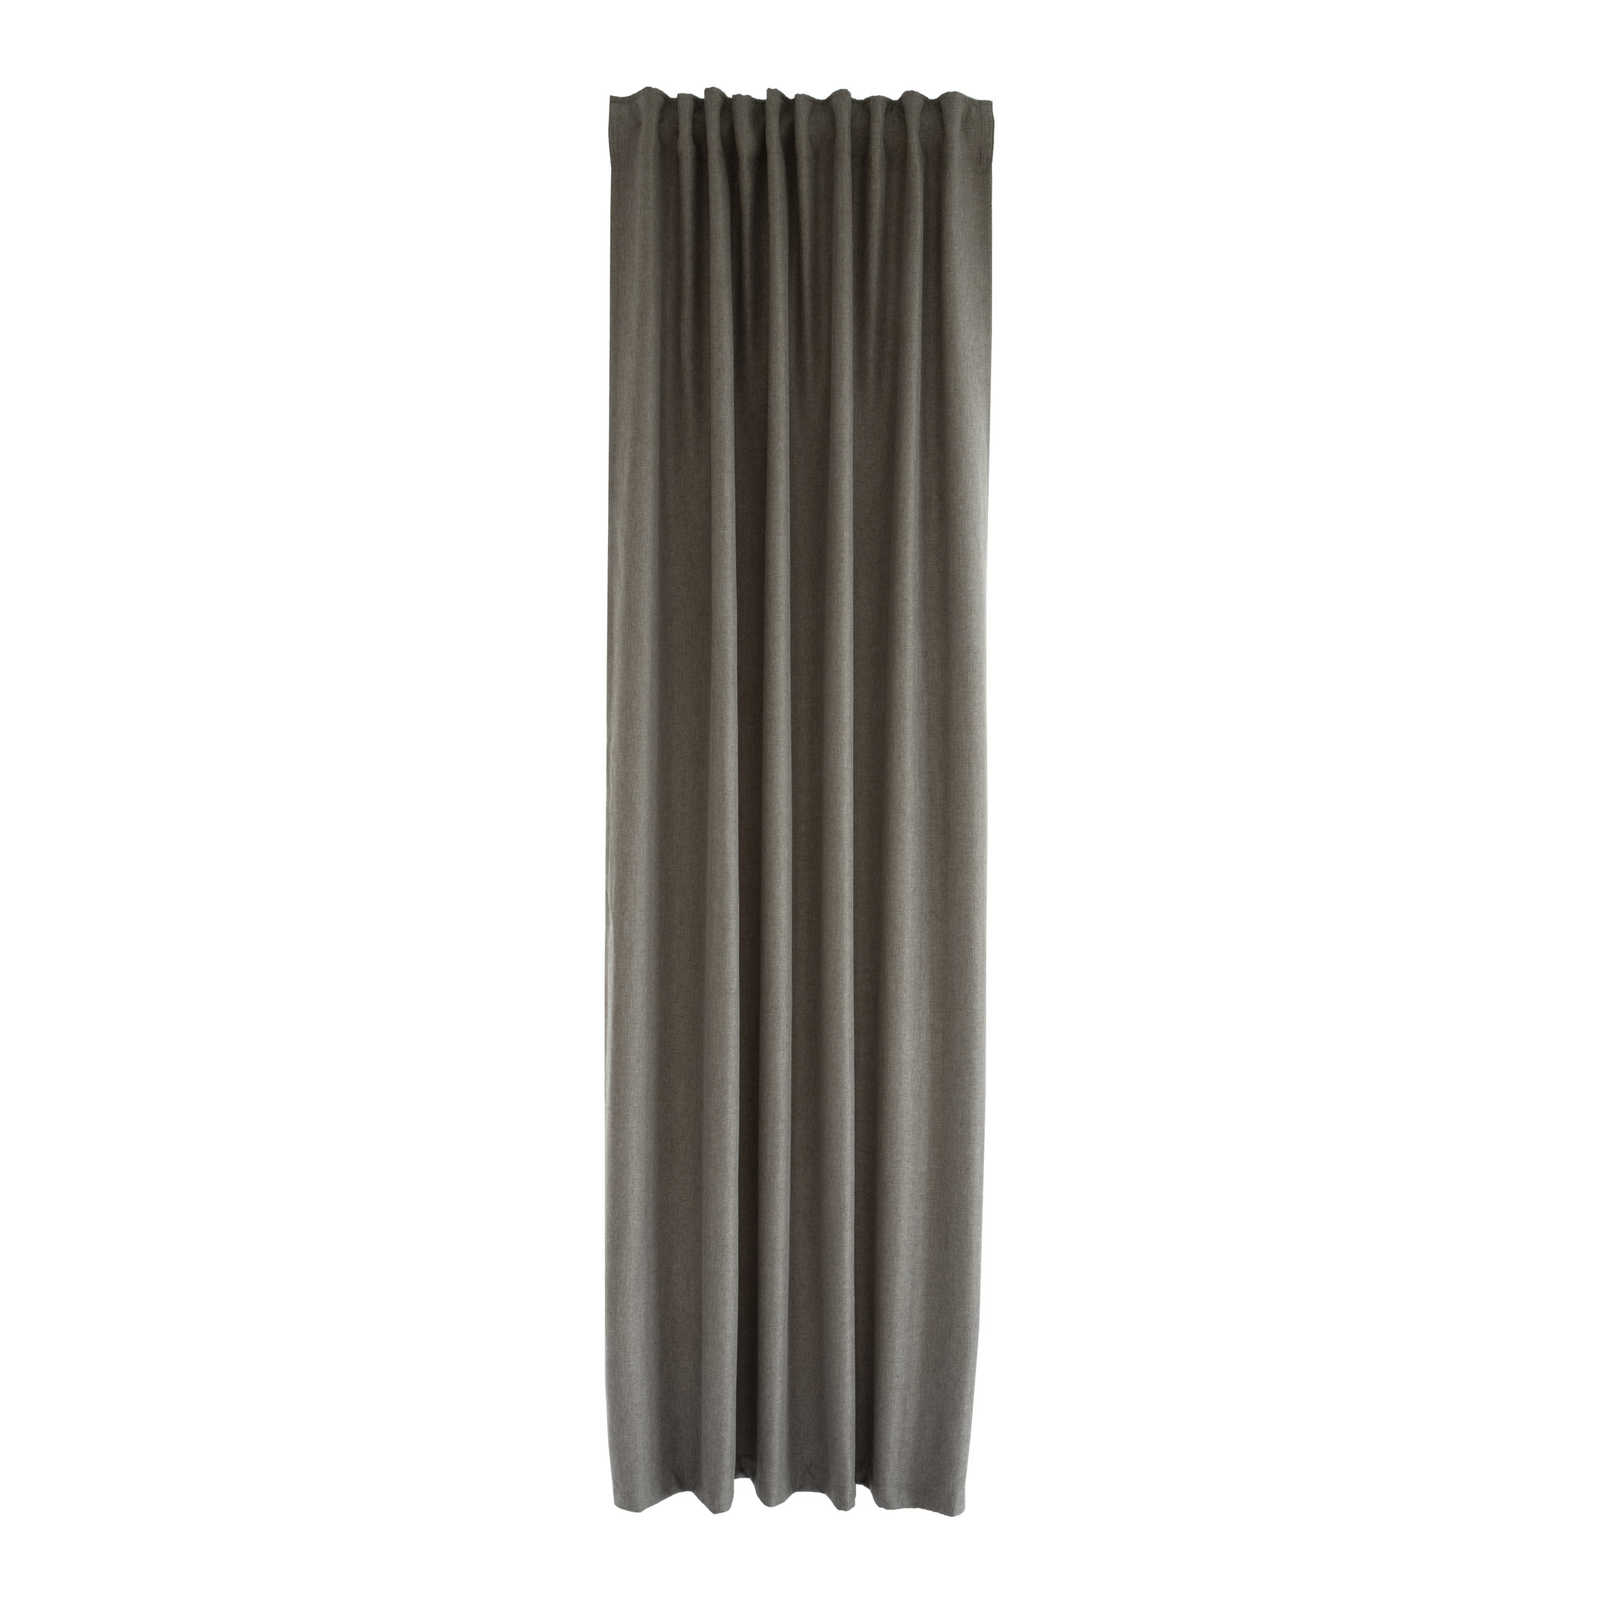         Decorative loop scarf 140 cm x 245 cm synthetic fibre taupe
    